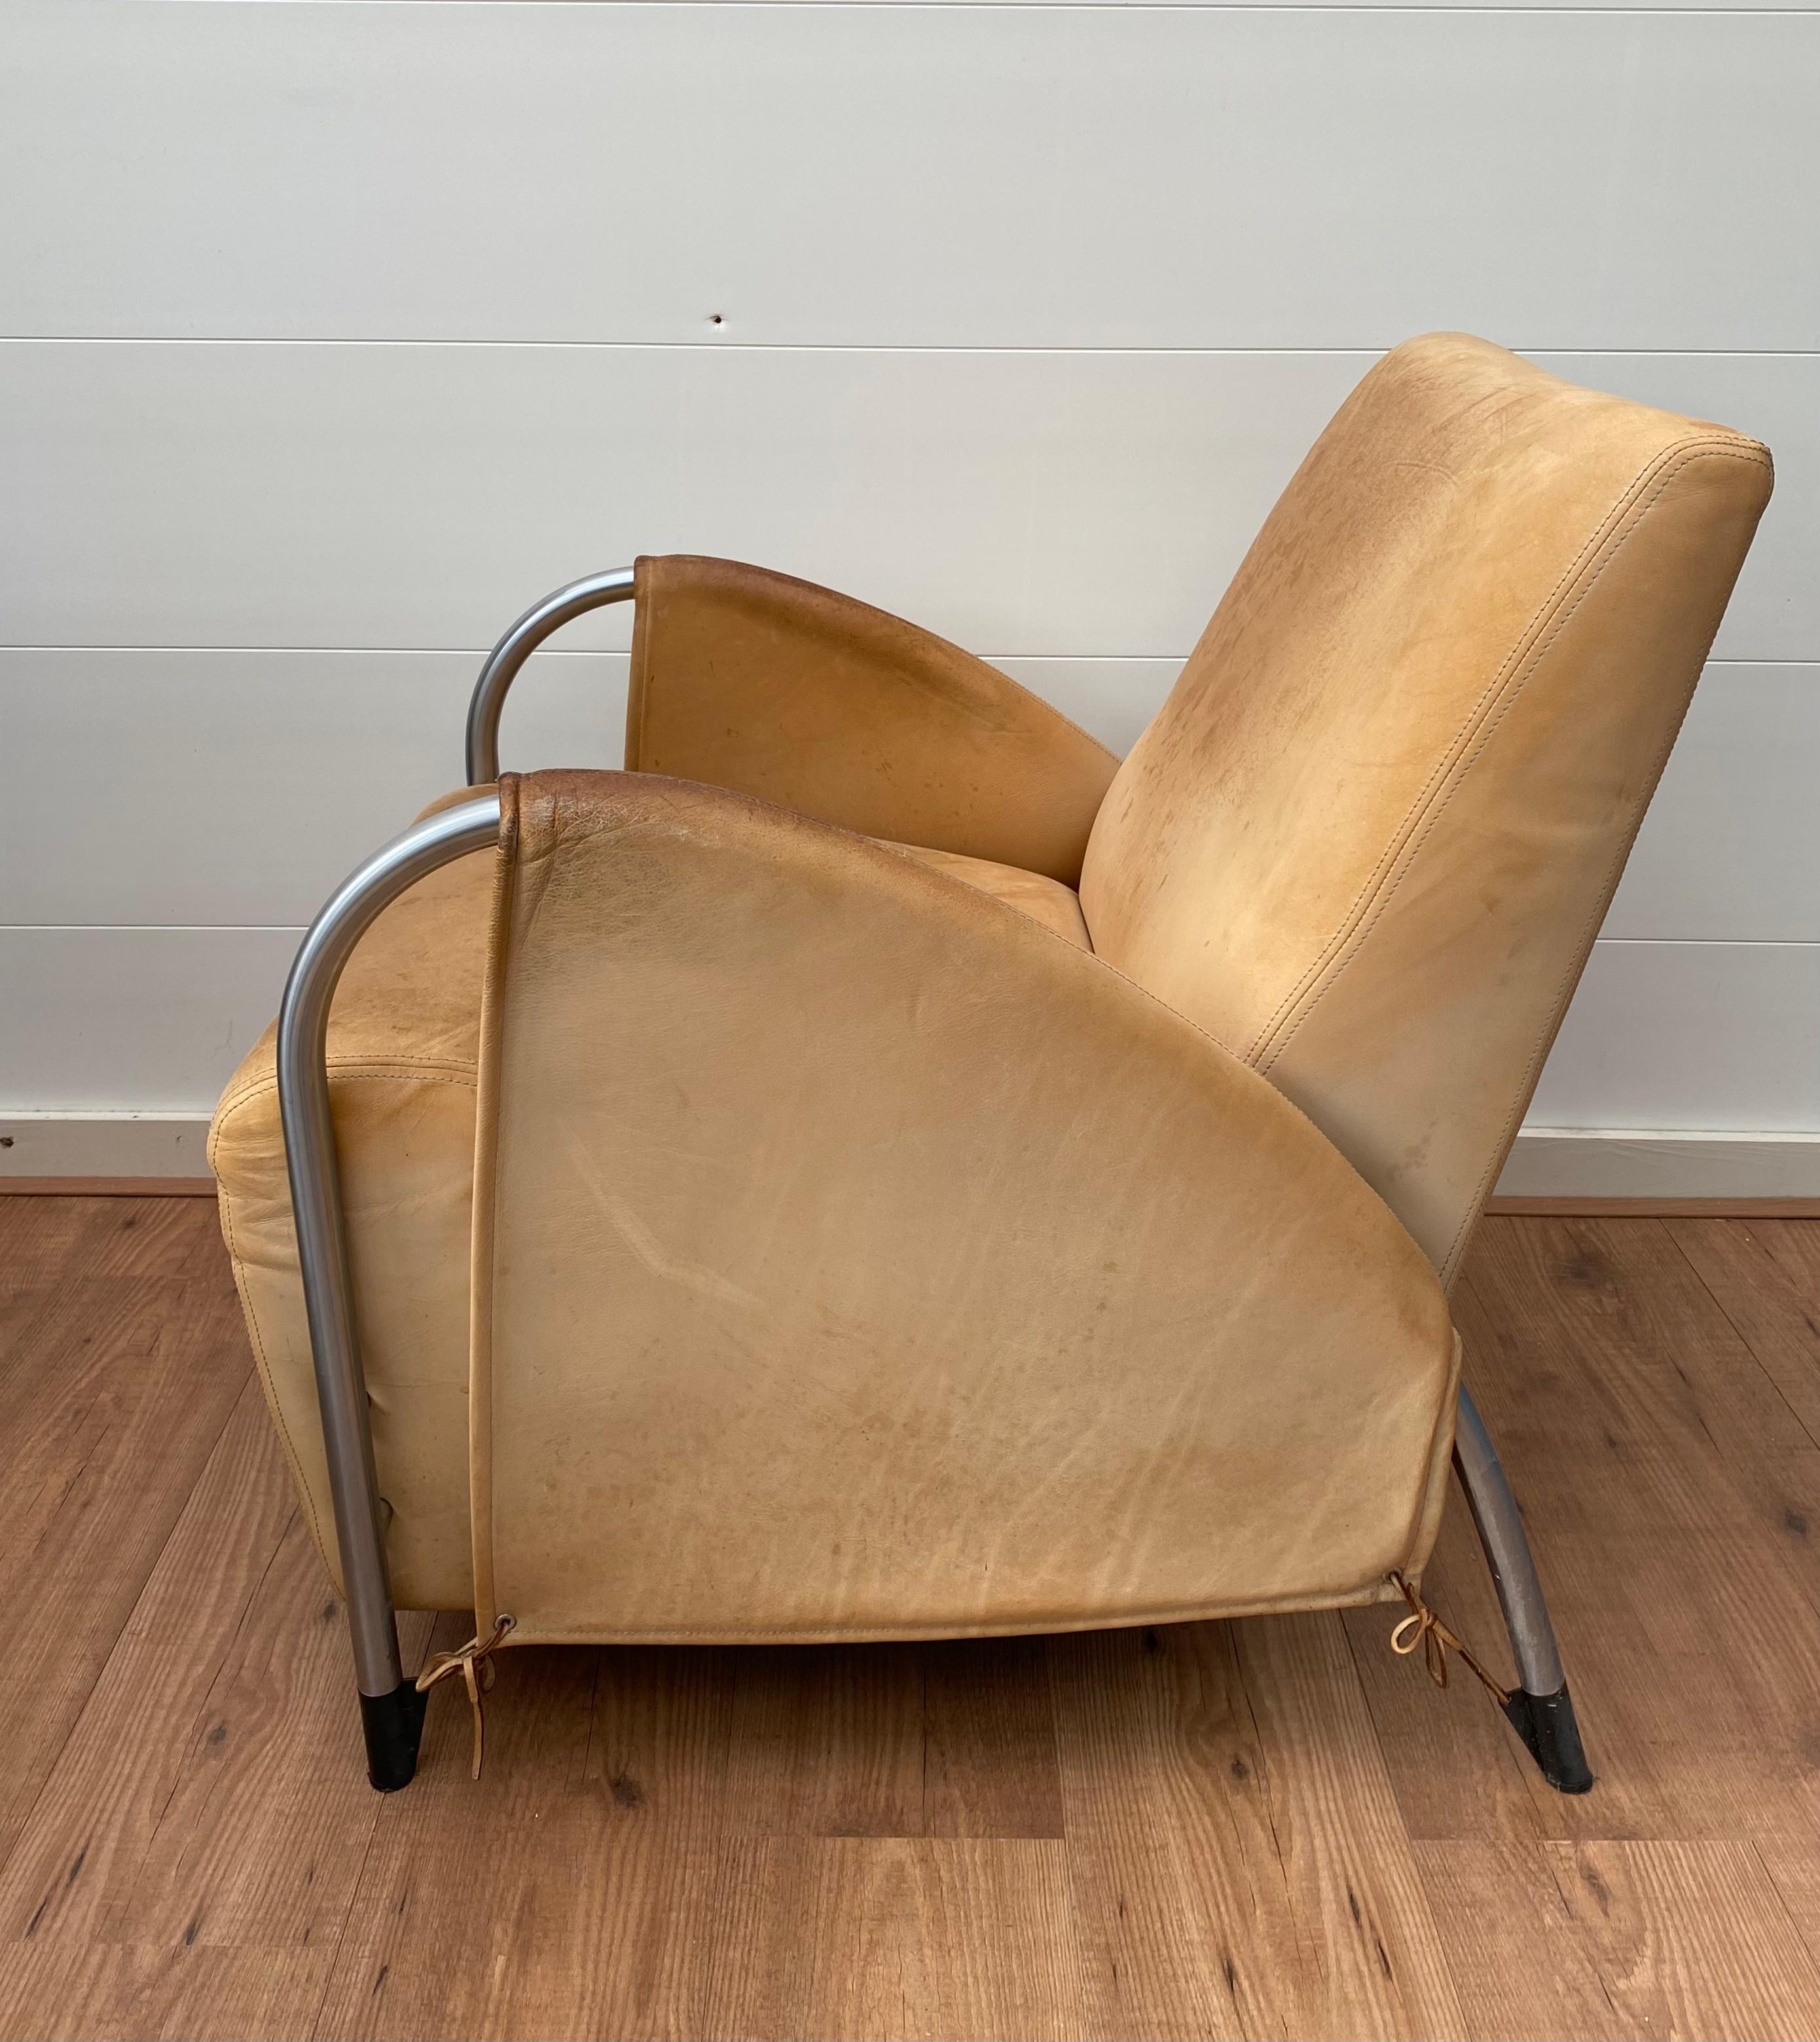 20th Century Art Deco, Machine Age Style Armchairs by Jan des Bouvrie for Gelderland For Sale